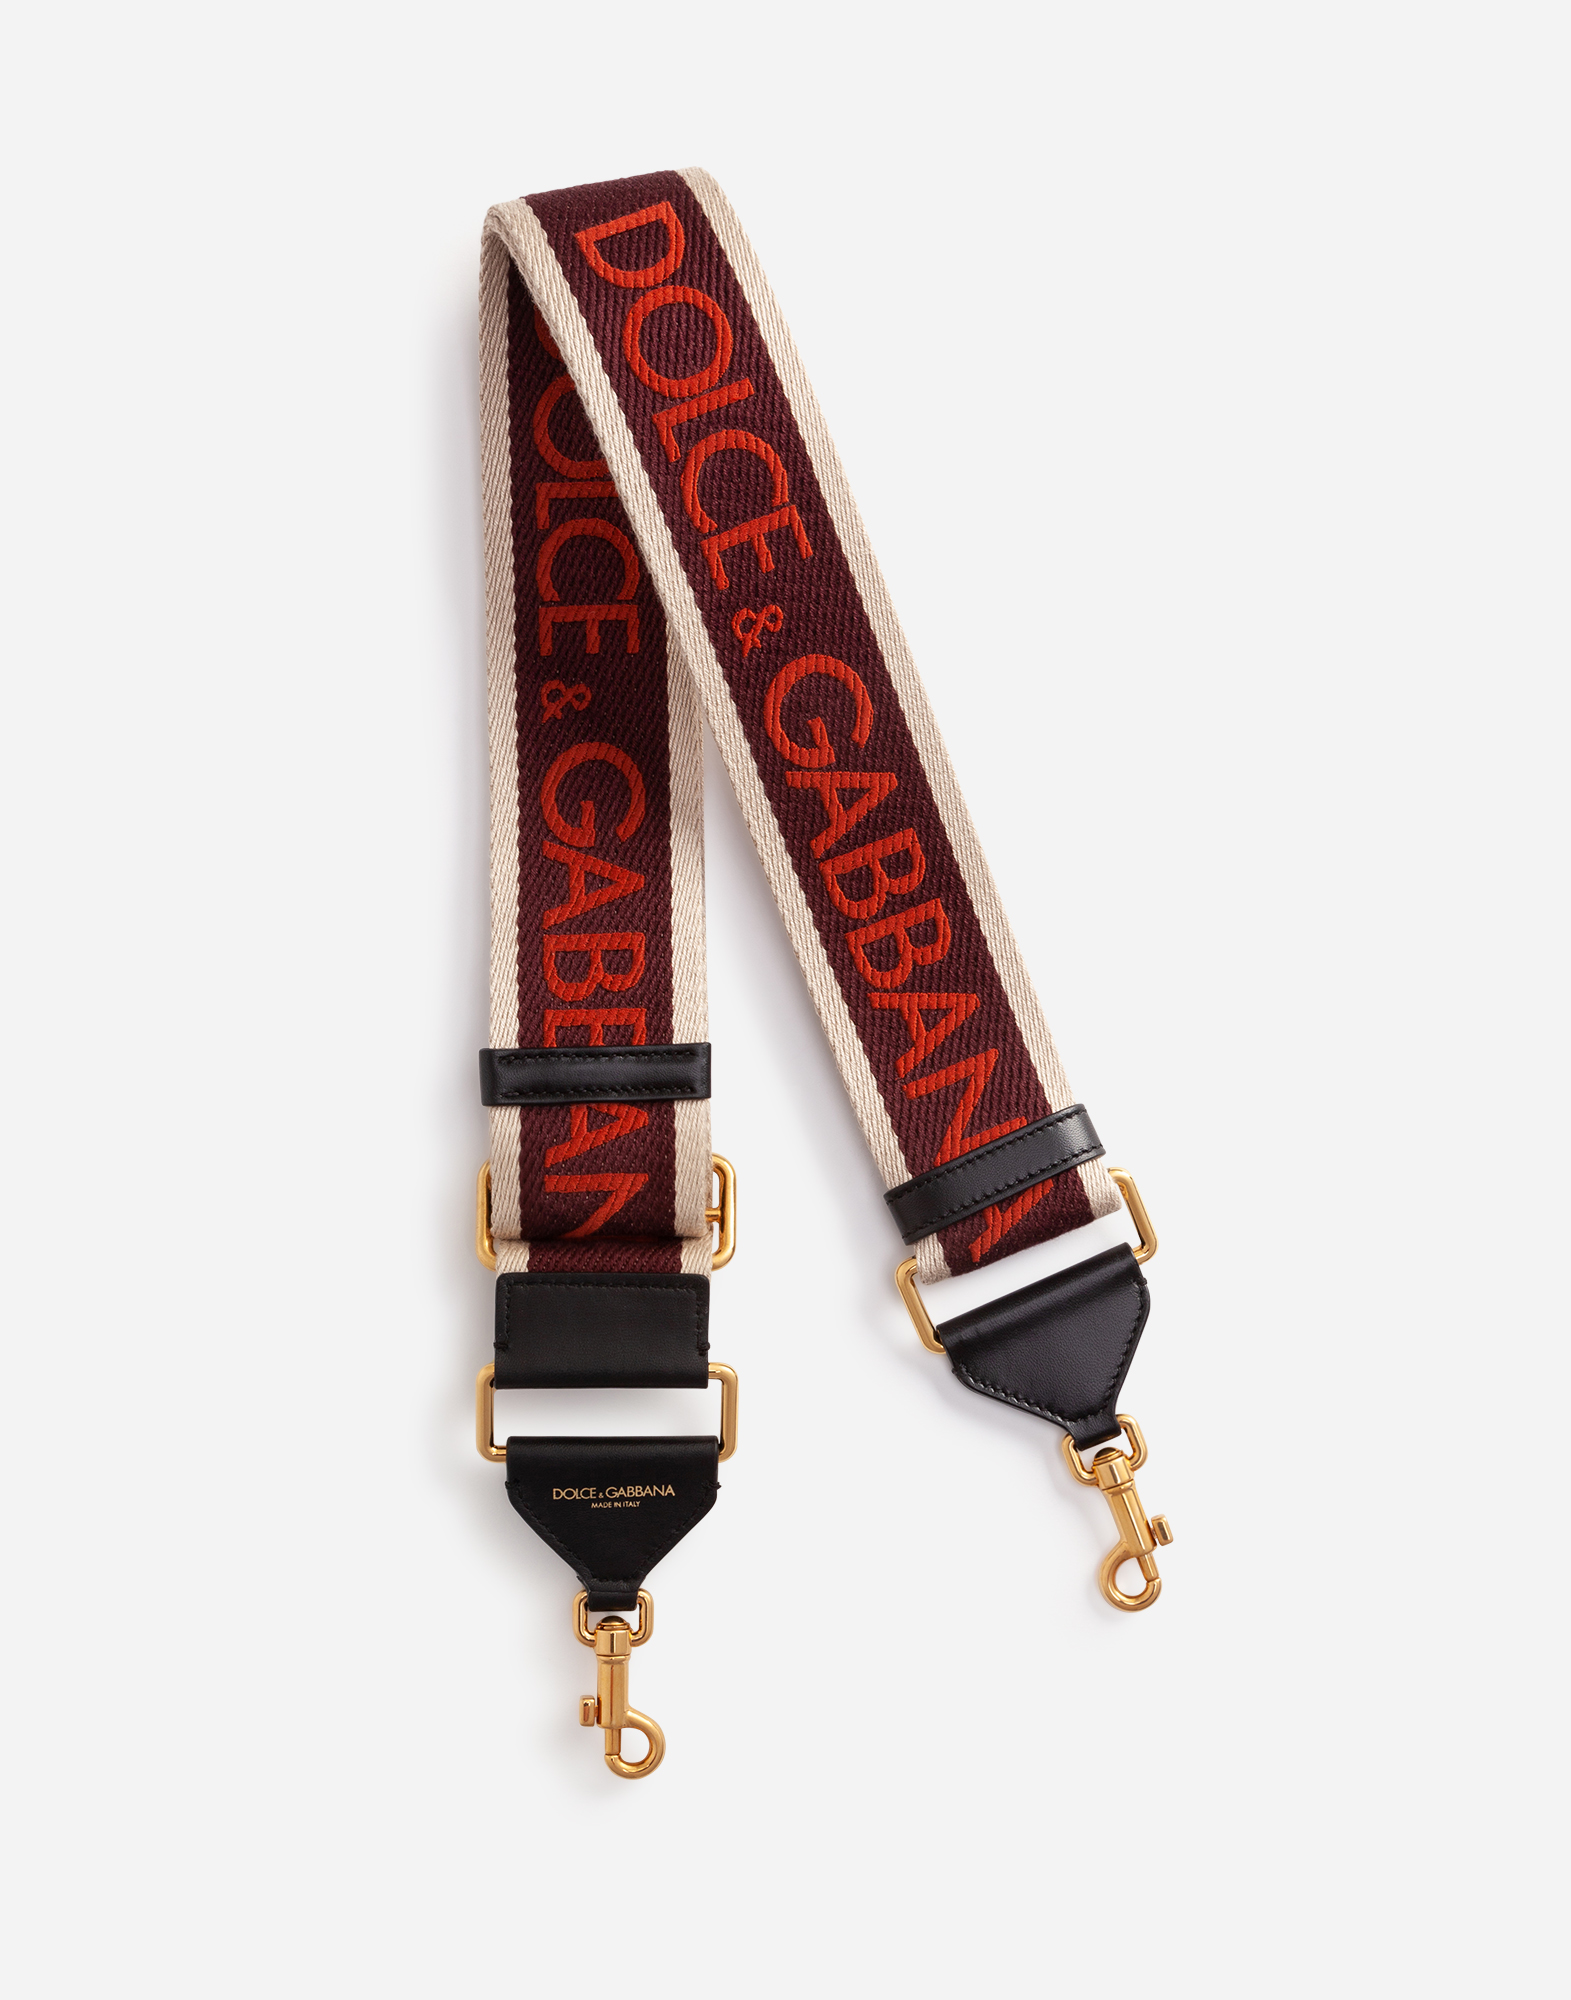 Dolce&Gabbana logo strap in Beige